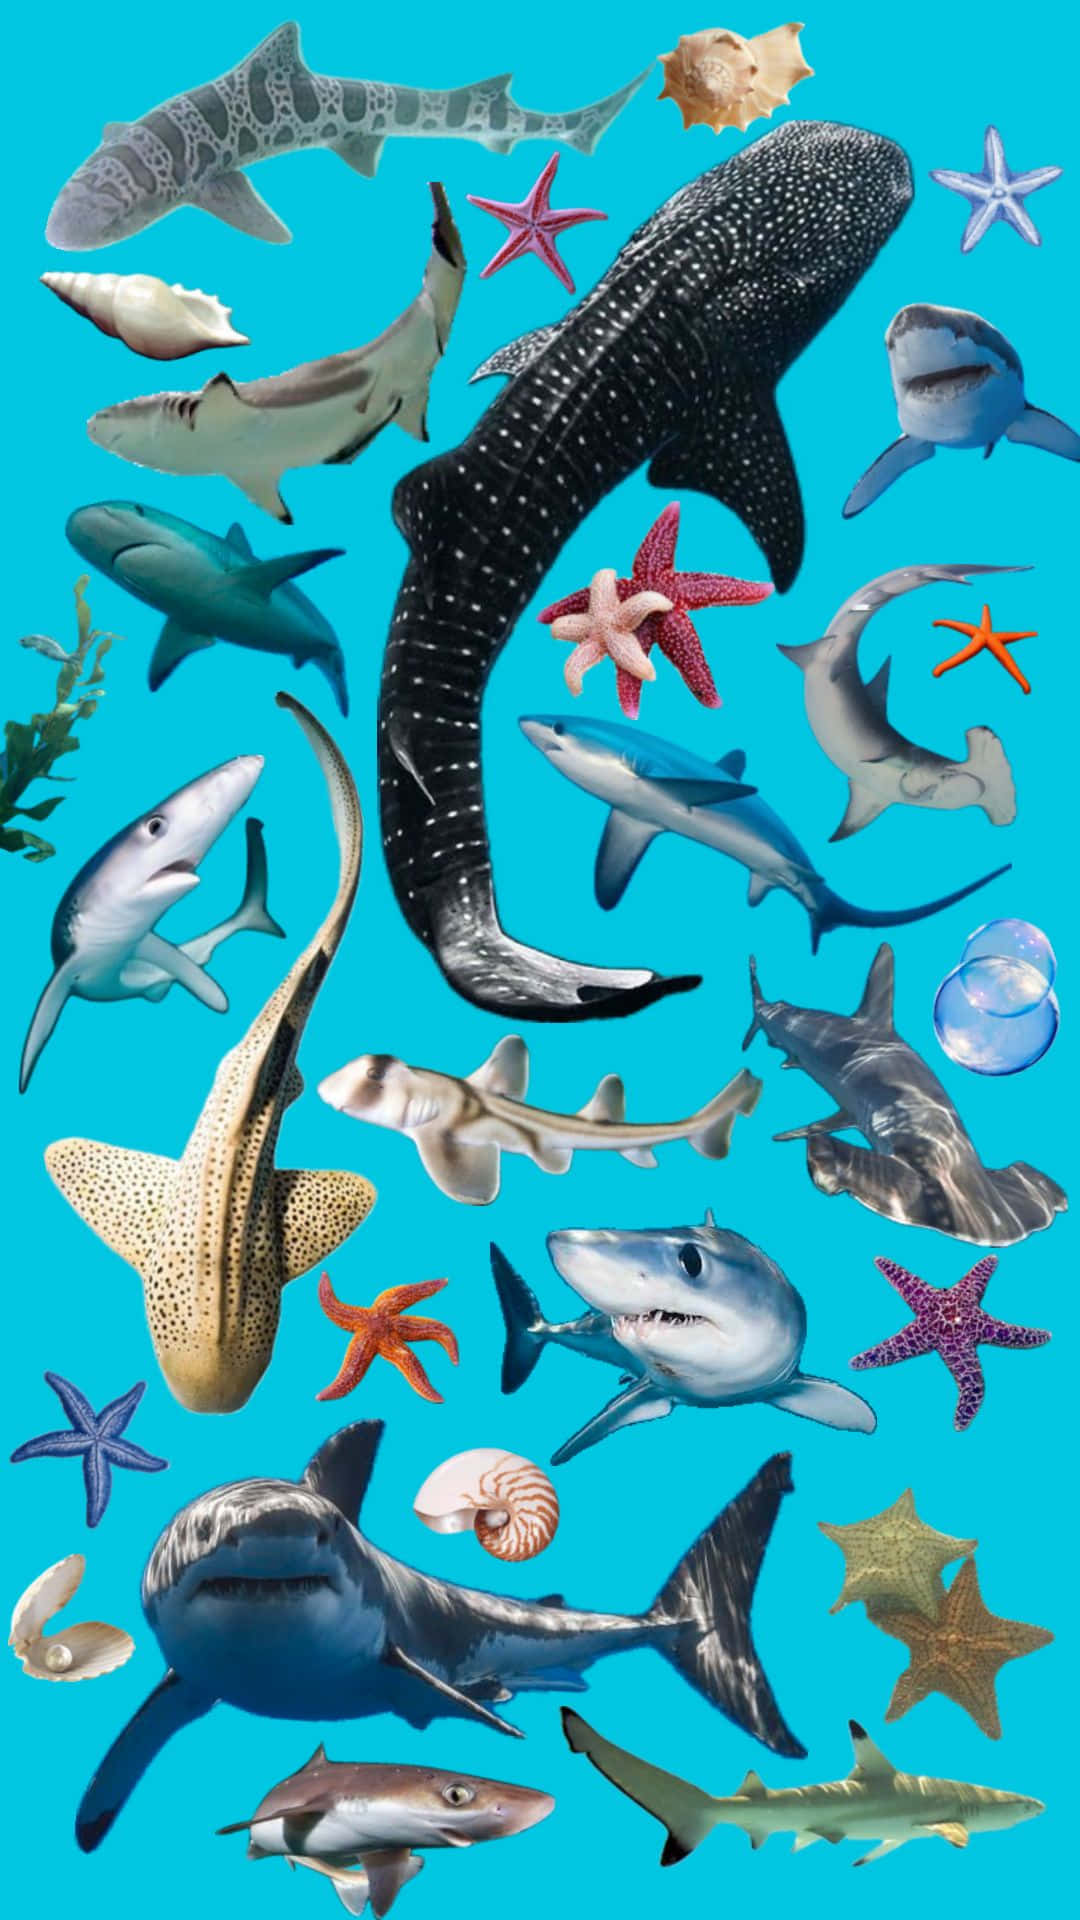 Oceanic Sharksand Marine Life Collage Wallpaper